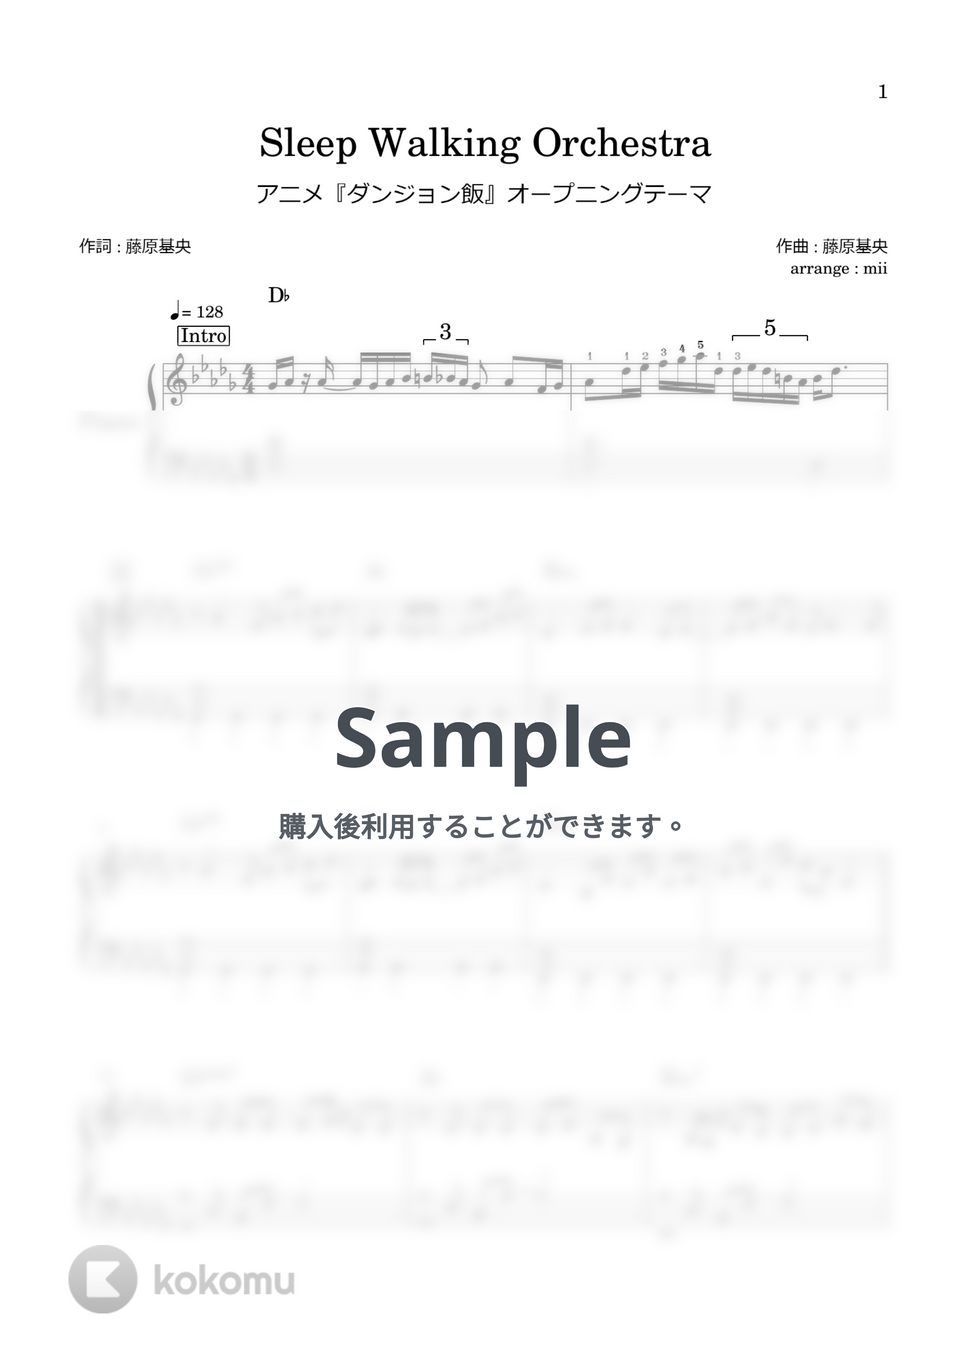 BUMP OF CHICKEN - Sleep Walking Orchestra (ダンジョン飯 op) by miiの楽譜棚